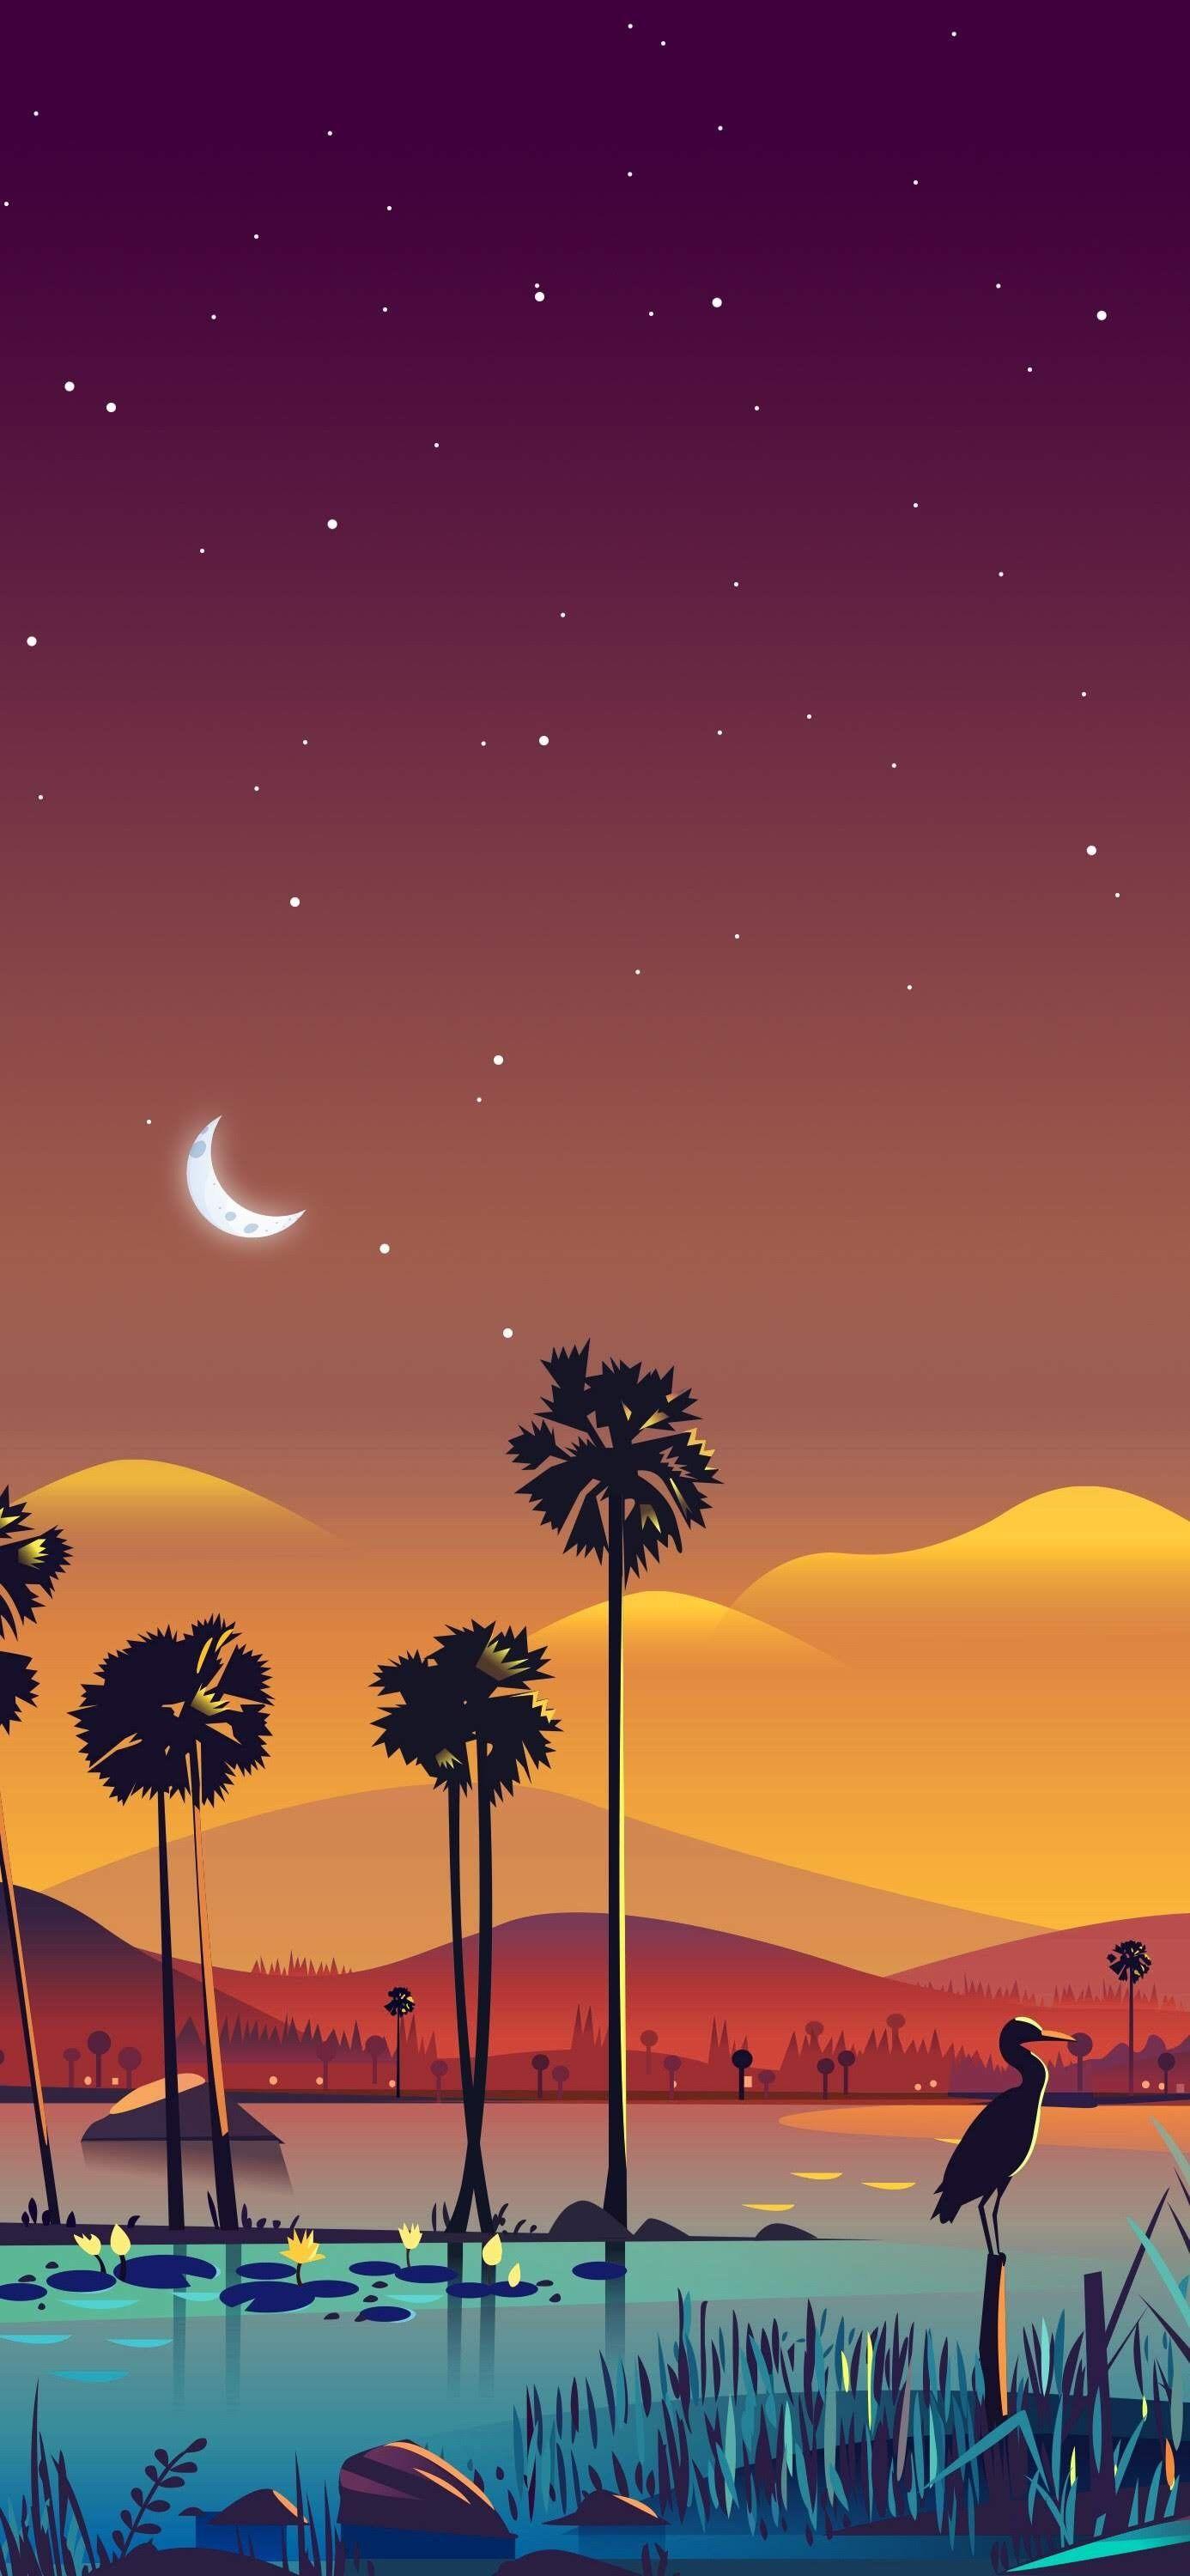 Desert Night Oasis with Palm Trees Art Wallpaper